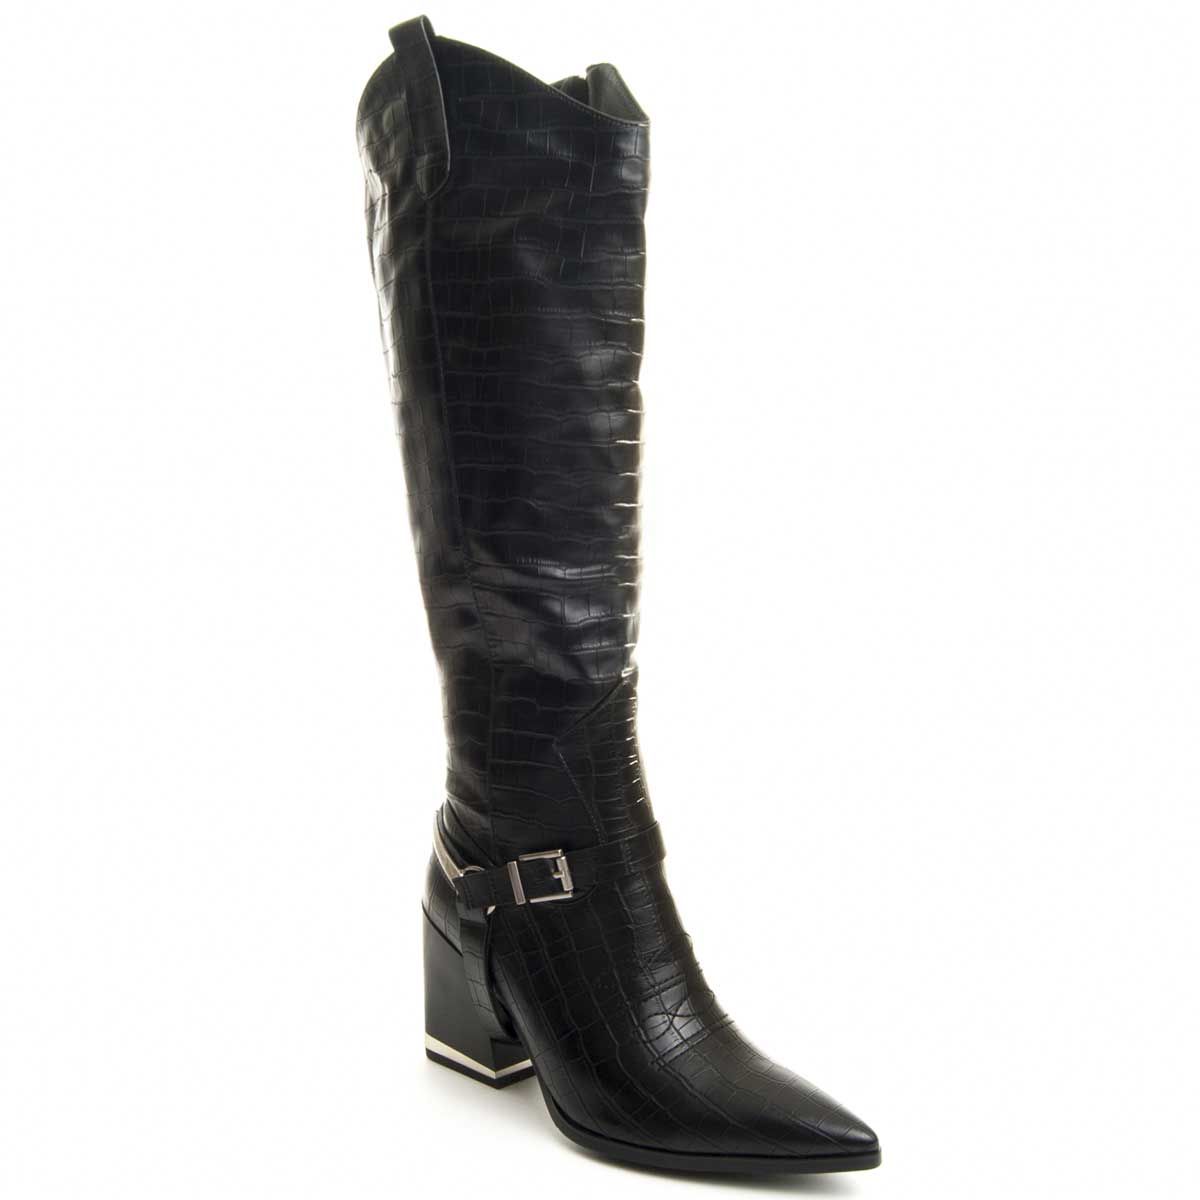 Montevita Laddy Knee High Boot in Black